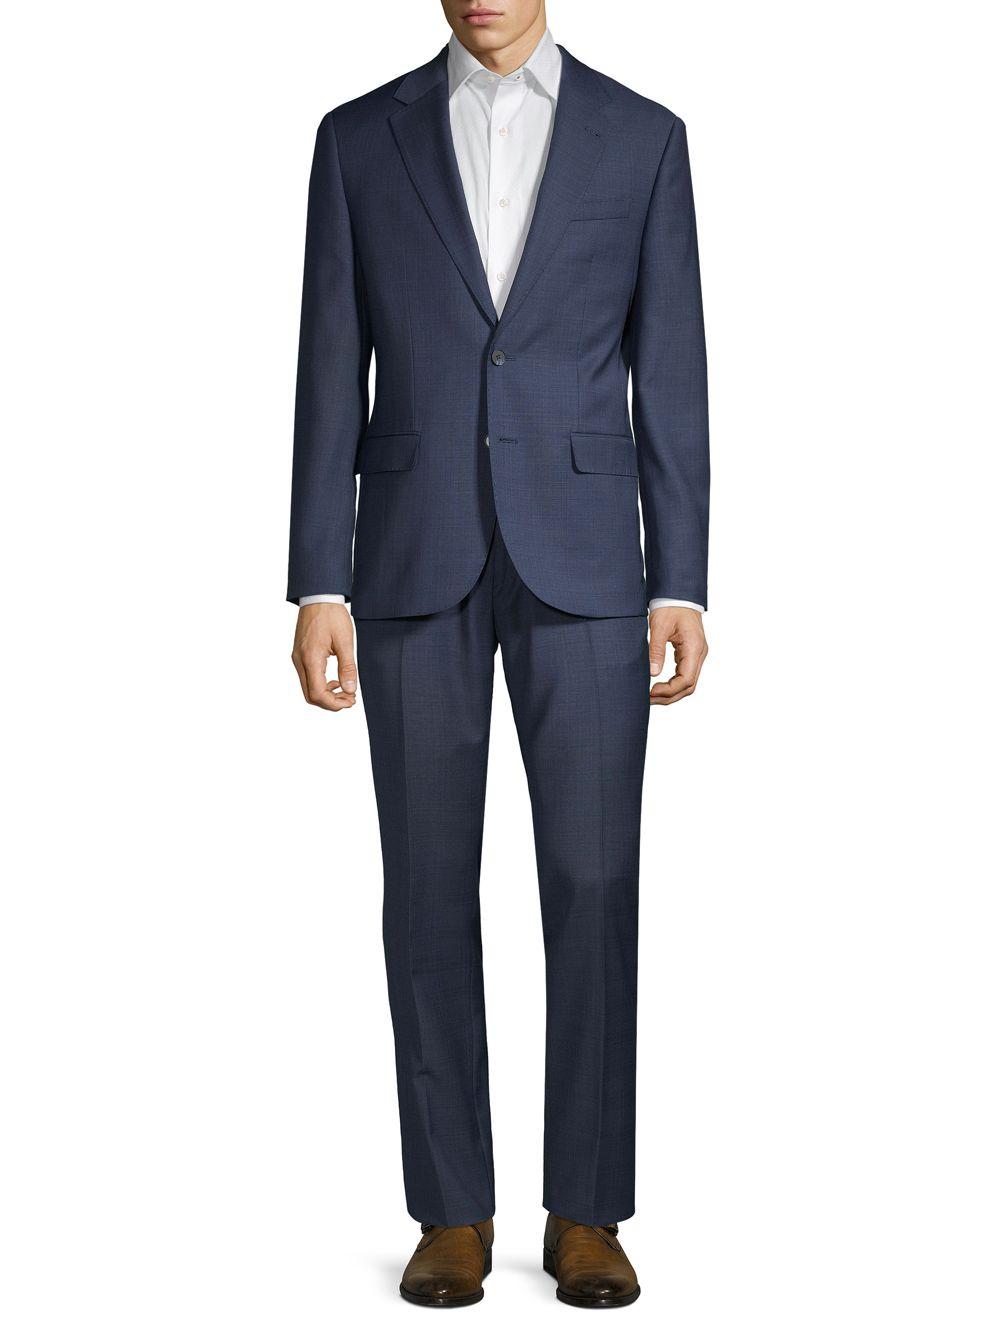 Karl Lagerfeld Slim-fit Textured Wool-blend Suit in Blue for Men - Lyst